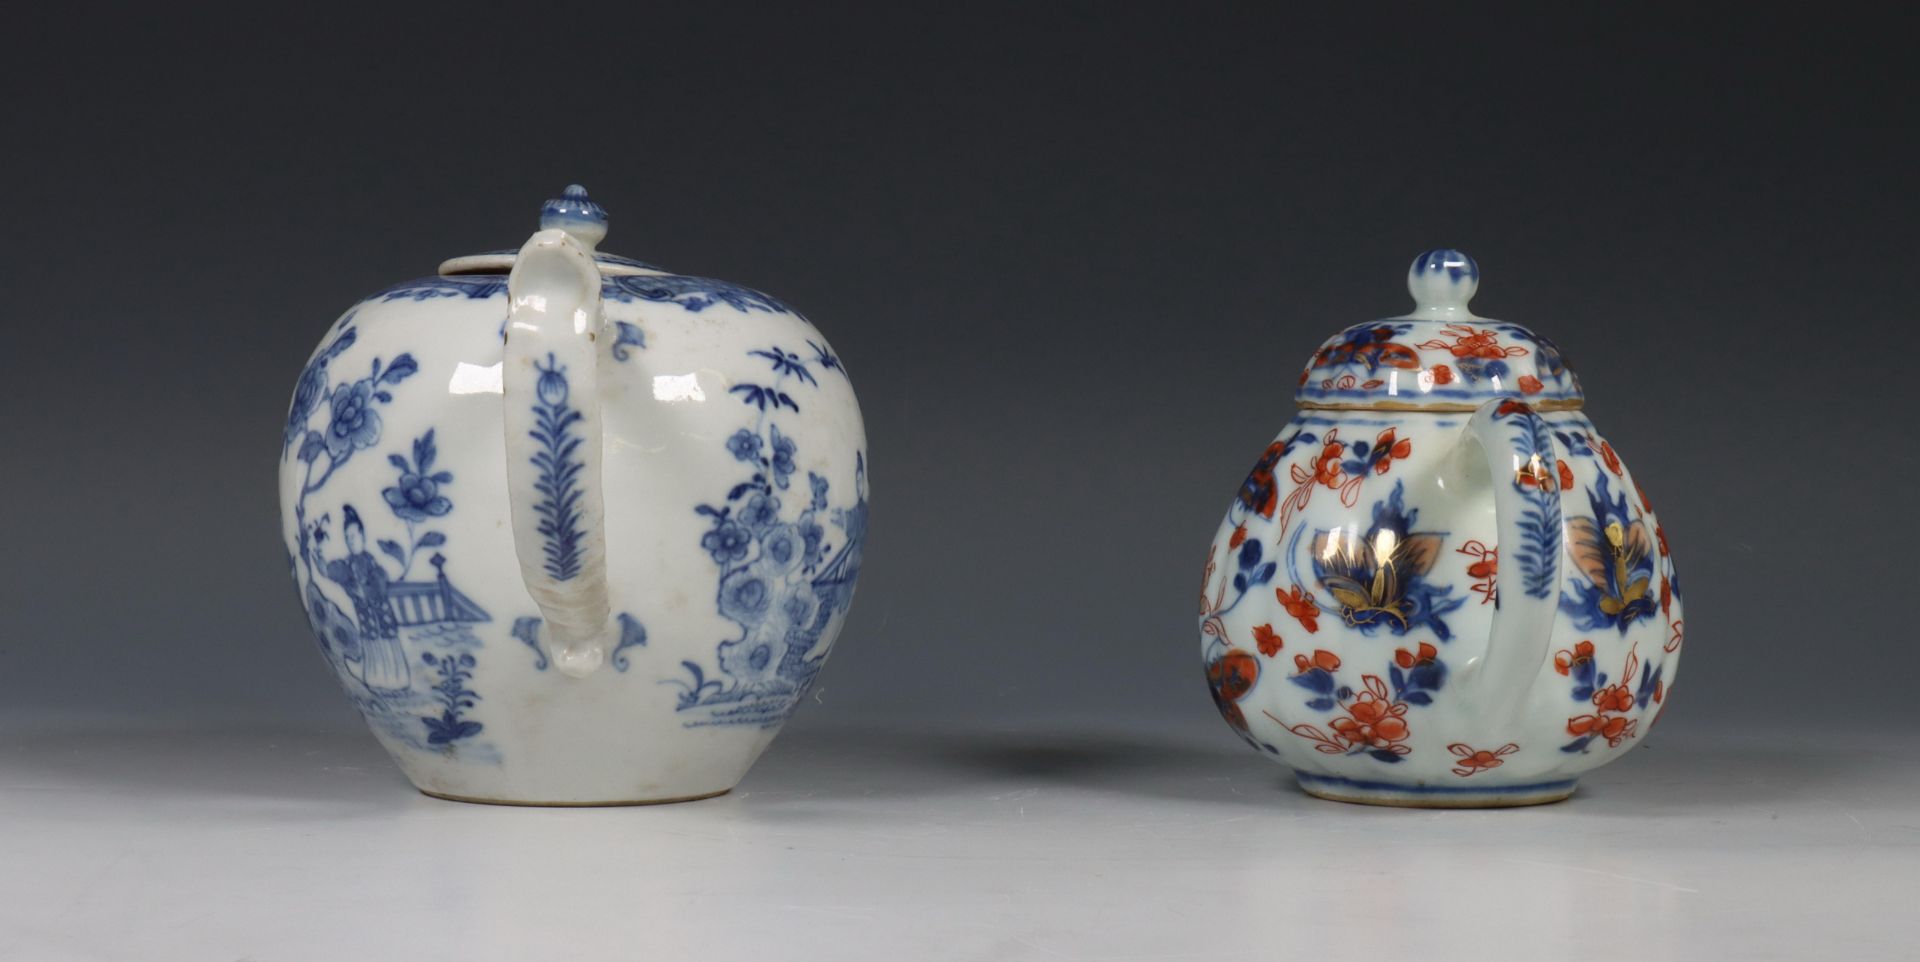 China, blauw-wit porseleinen en een Imari porseleinen theepot, 18e eeuw, - Bild 4 aus 7